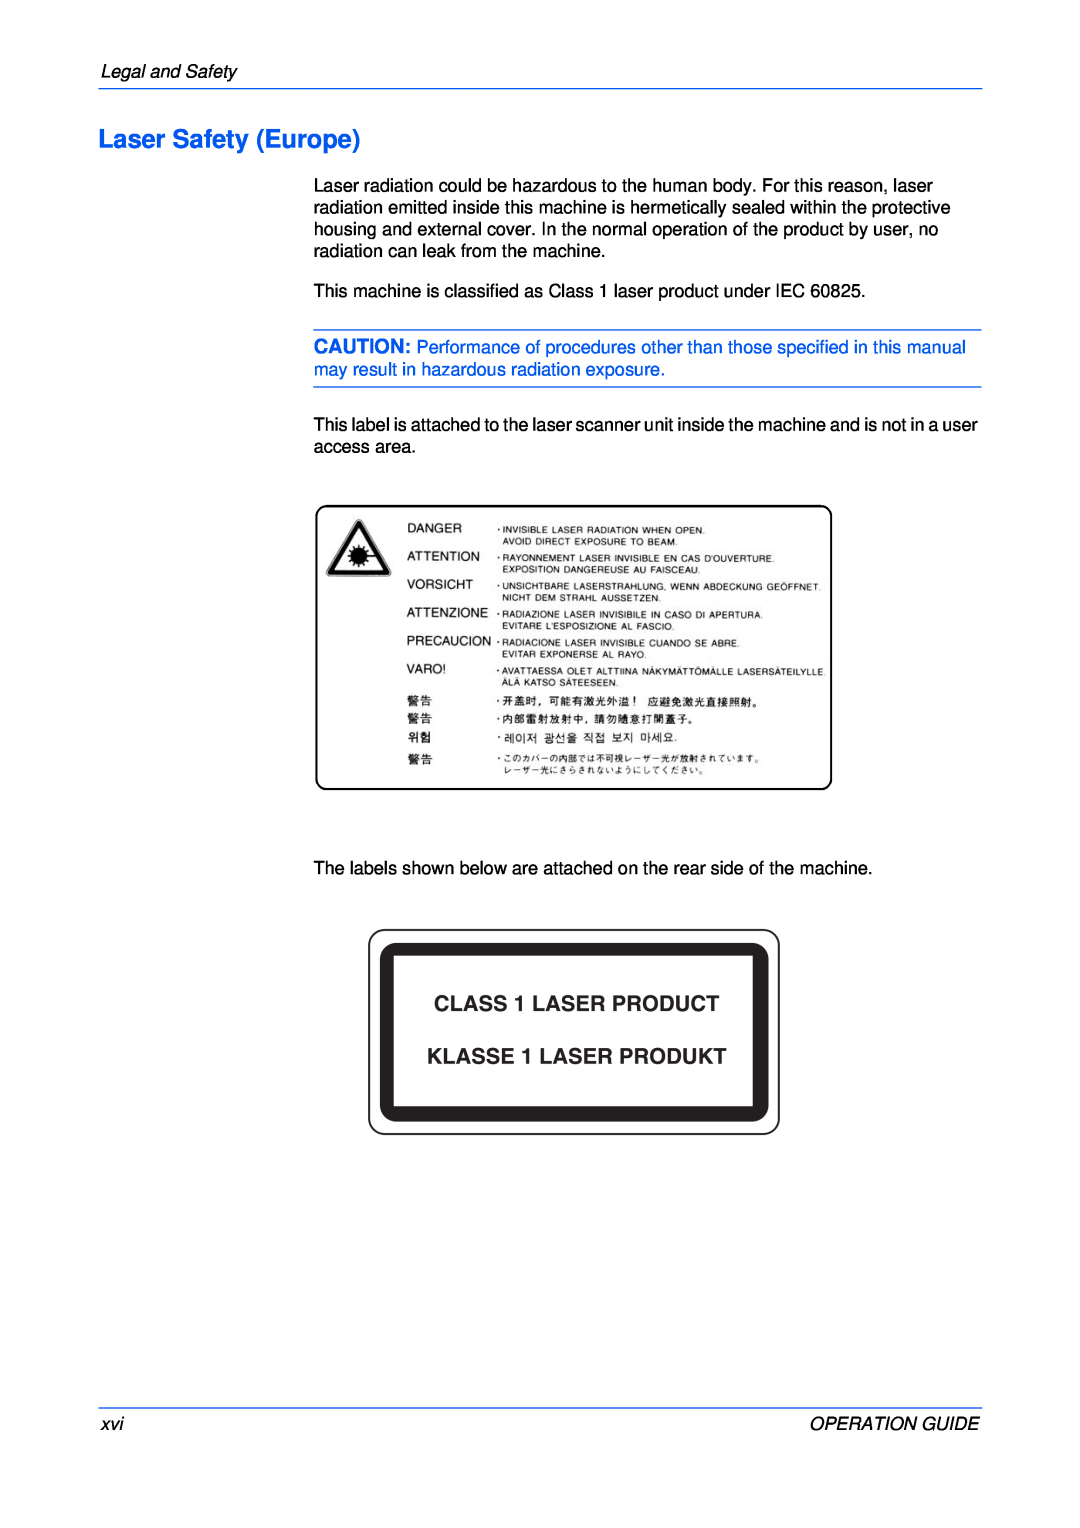 Olivetti 18MF manual Laser Safety Europe 